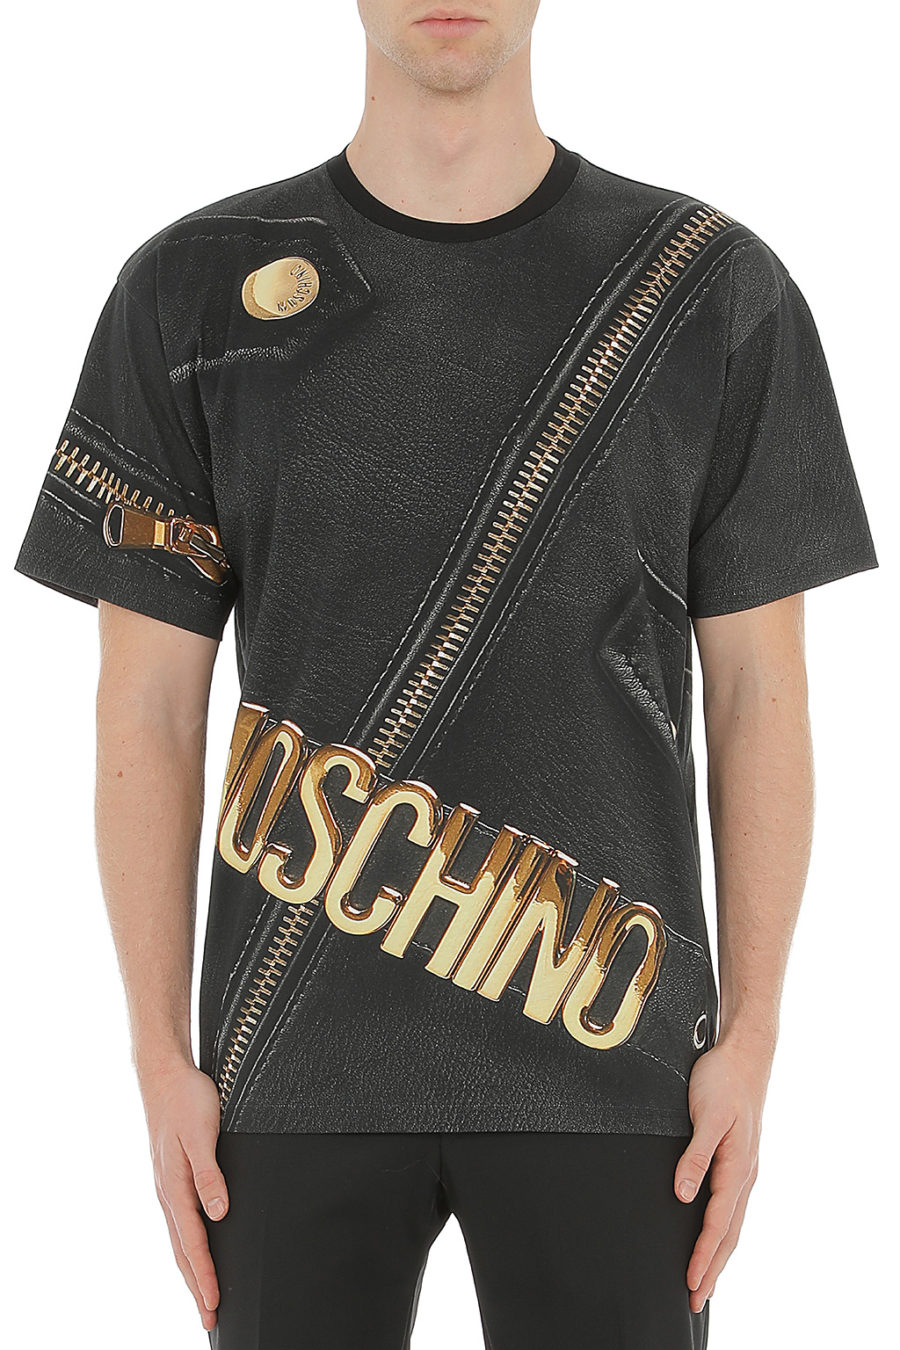 T-shirt Moschino Couture noir avec zip doré - 0709 5240 1888